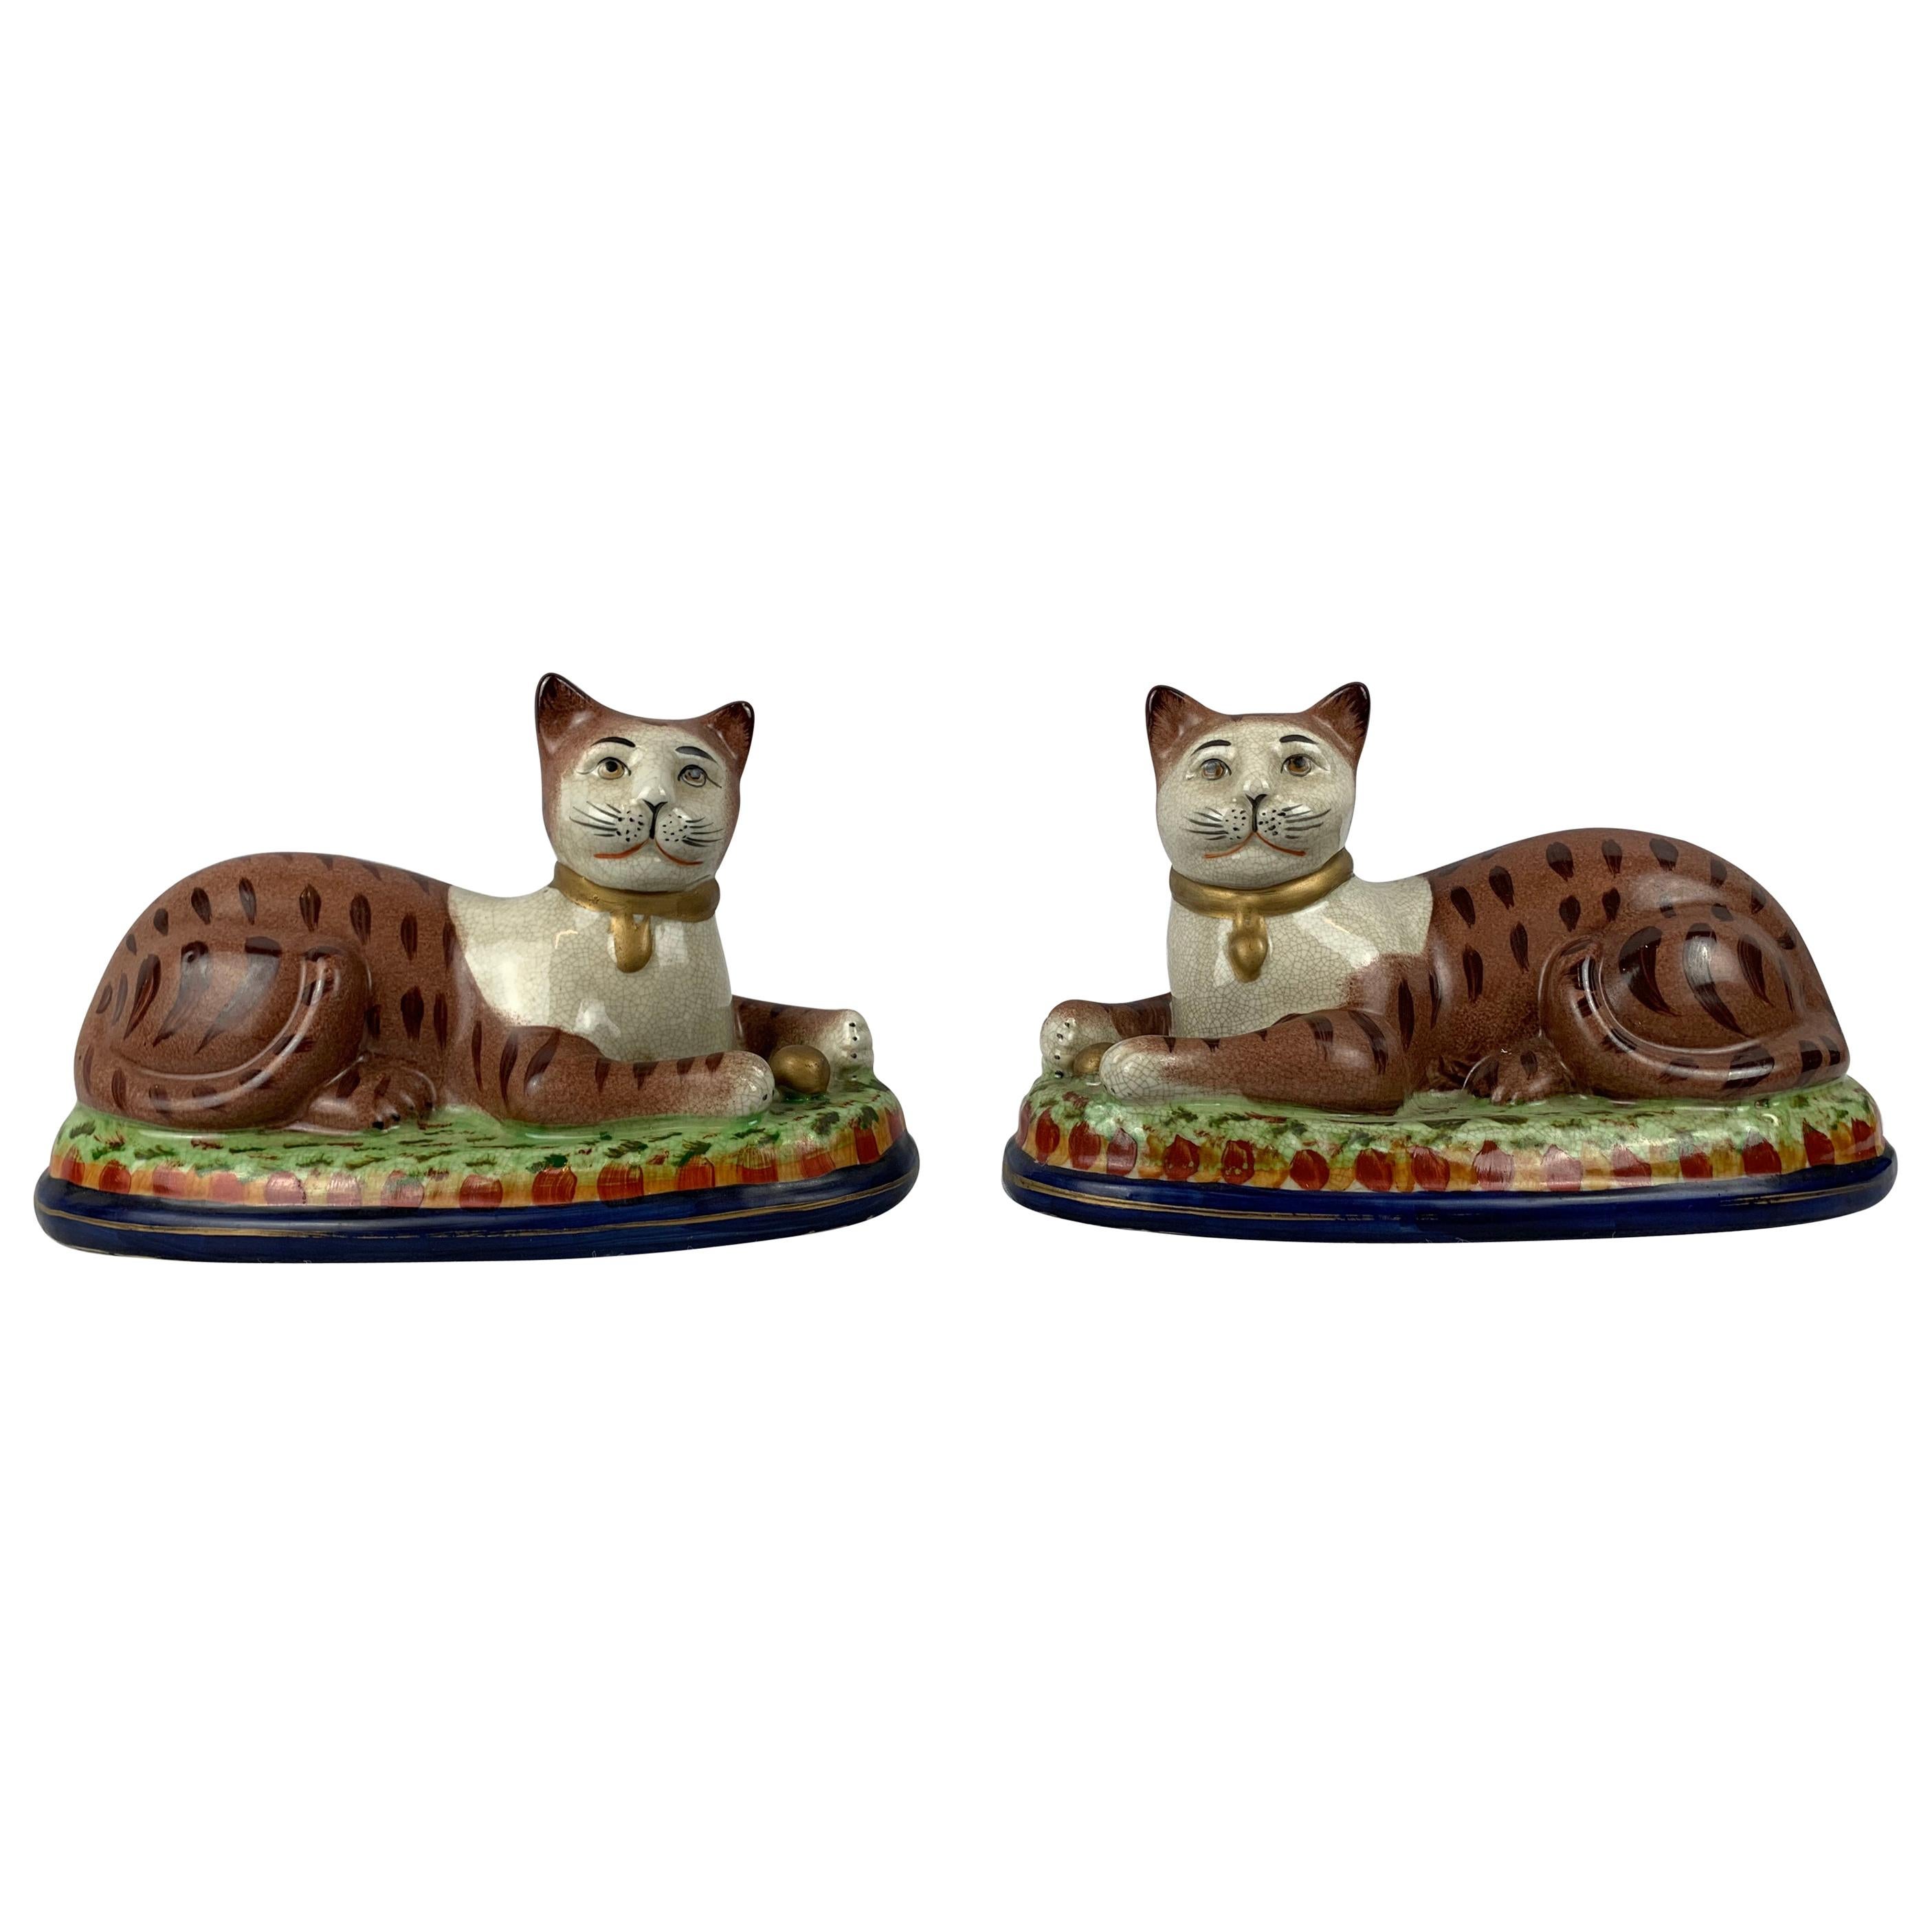  Staffordshire Ceramic Hand Decorated Recumbent Cats-A Pair